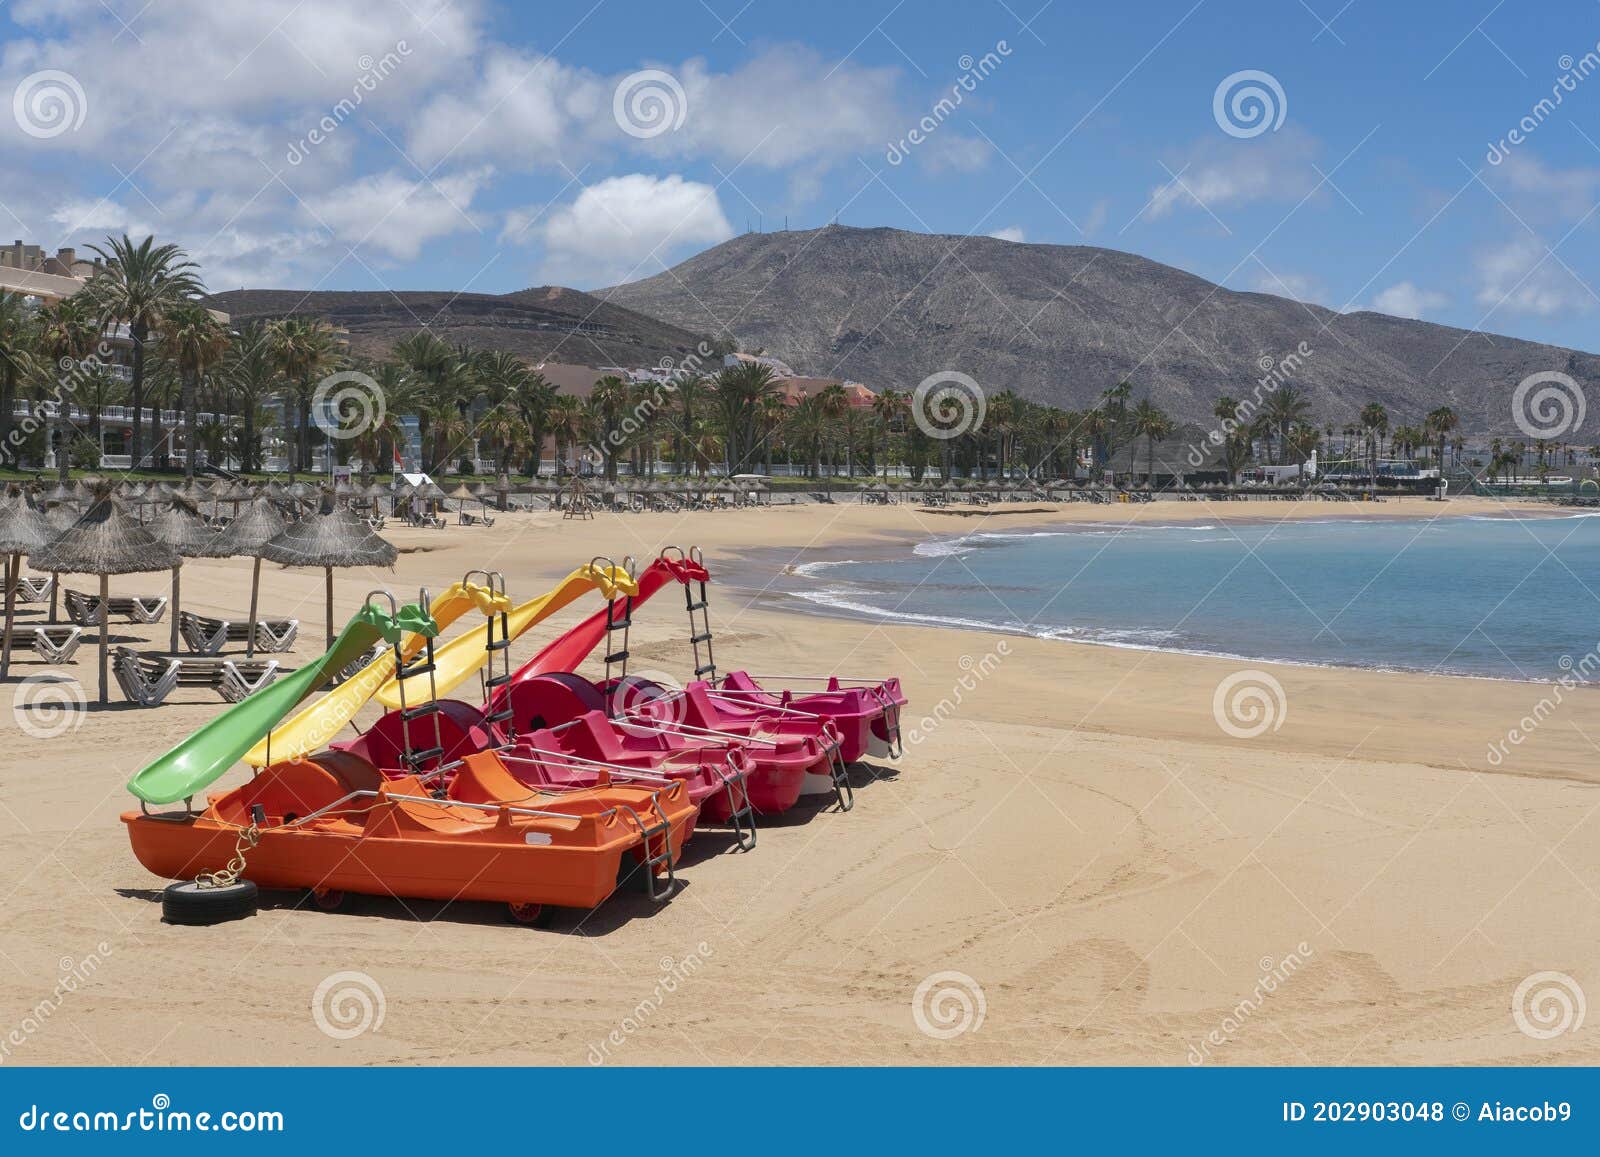 Beach Known As Playa El Camison, Las Americas, Tenerife, Canary Islands, Spain Stock Photo - Image of boat, people: 202903048